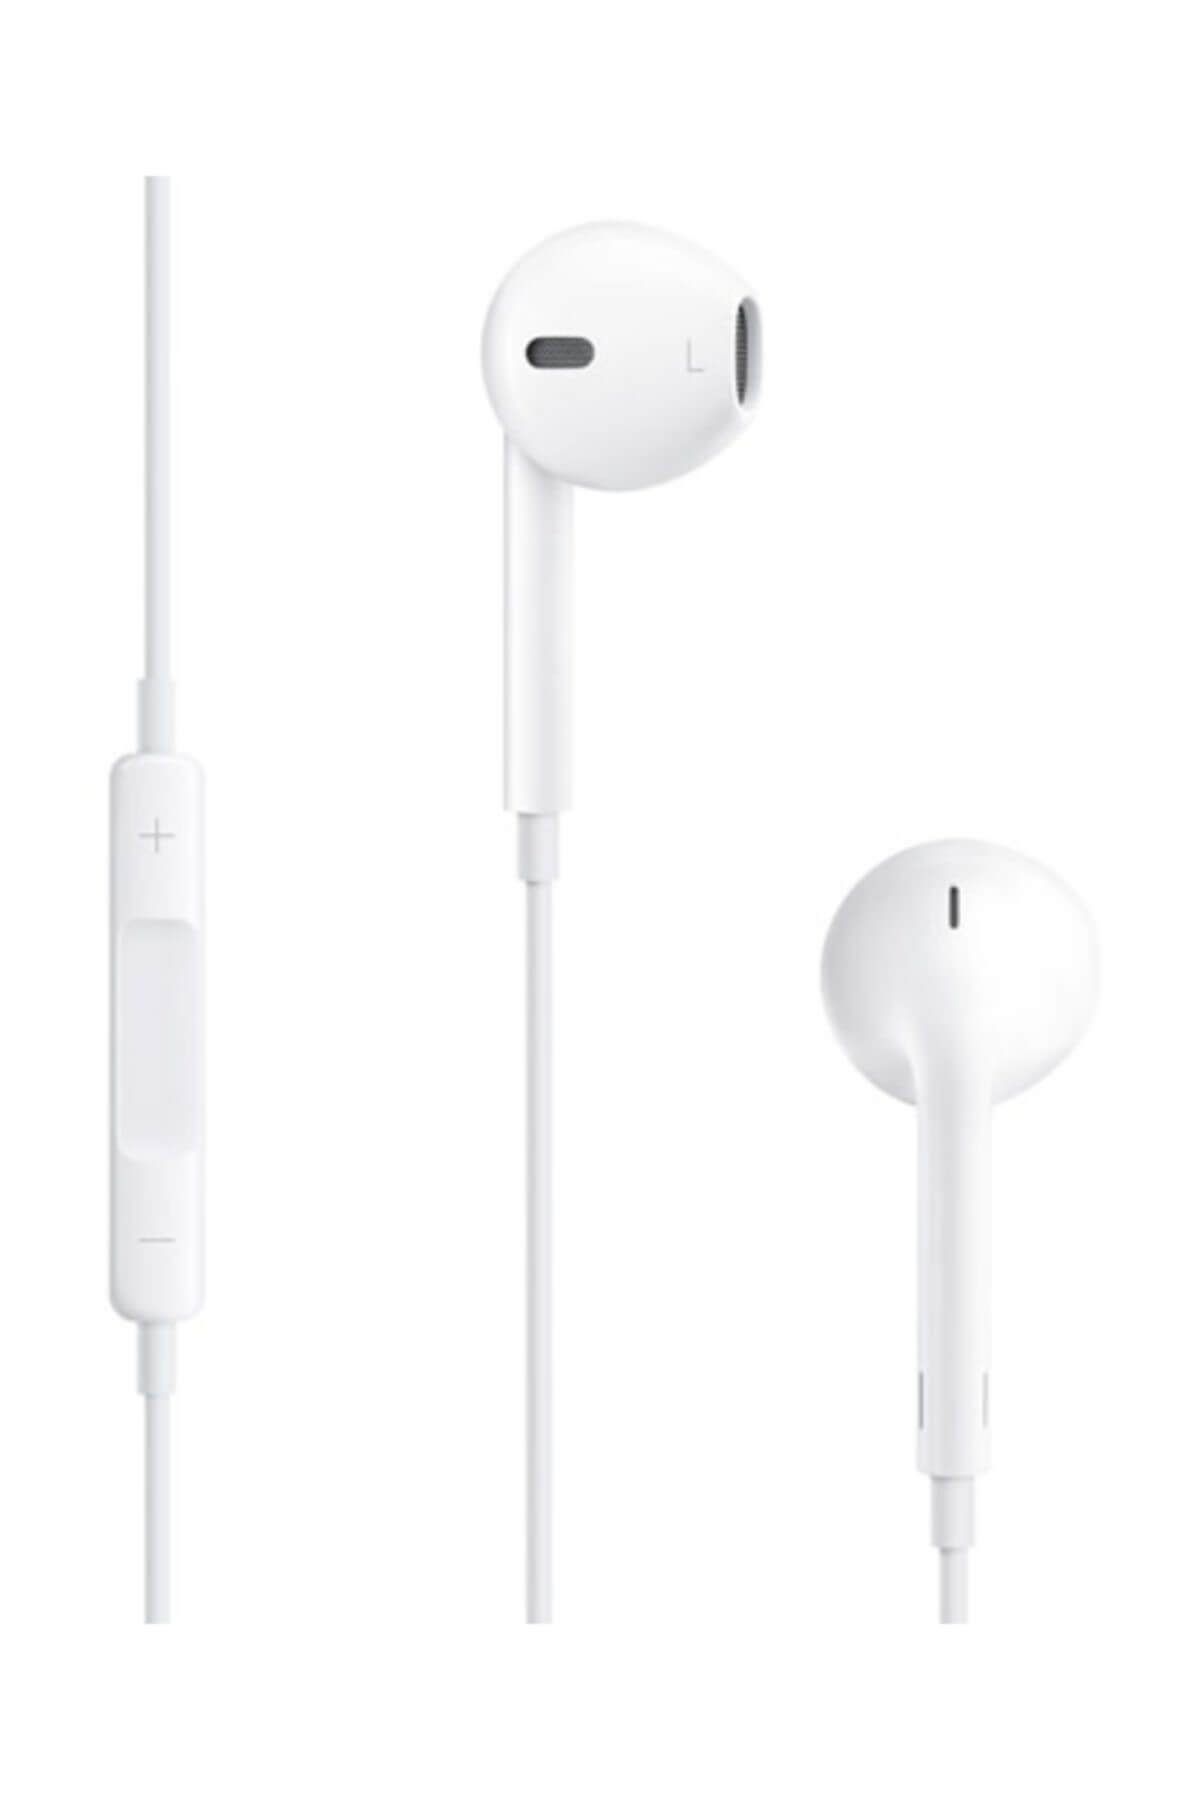 Apple Orjinal EarPods Mikrofonlu Kulaklık